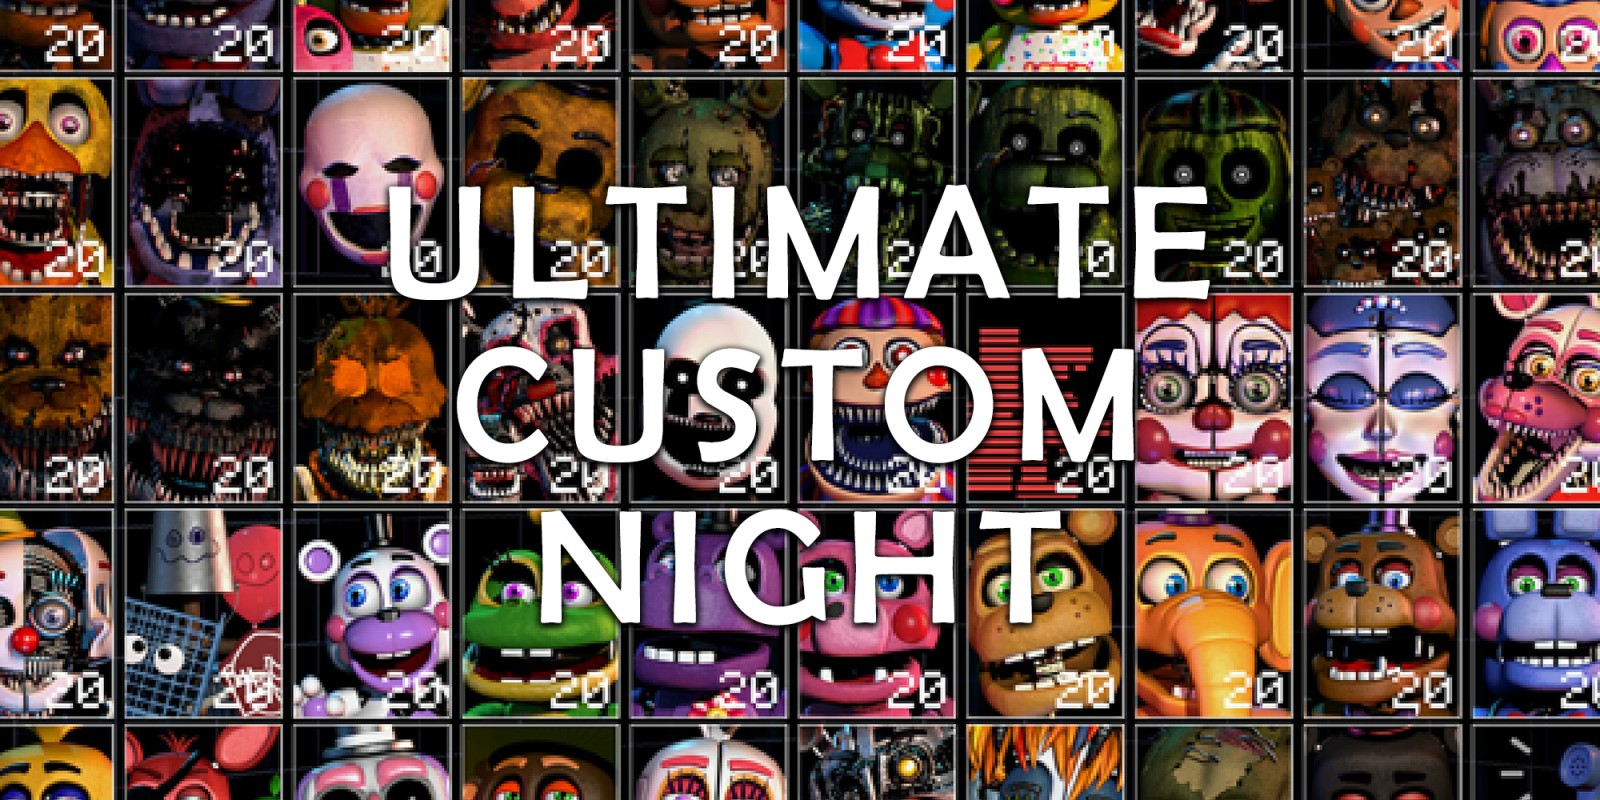 ultimate custom night online